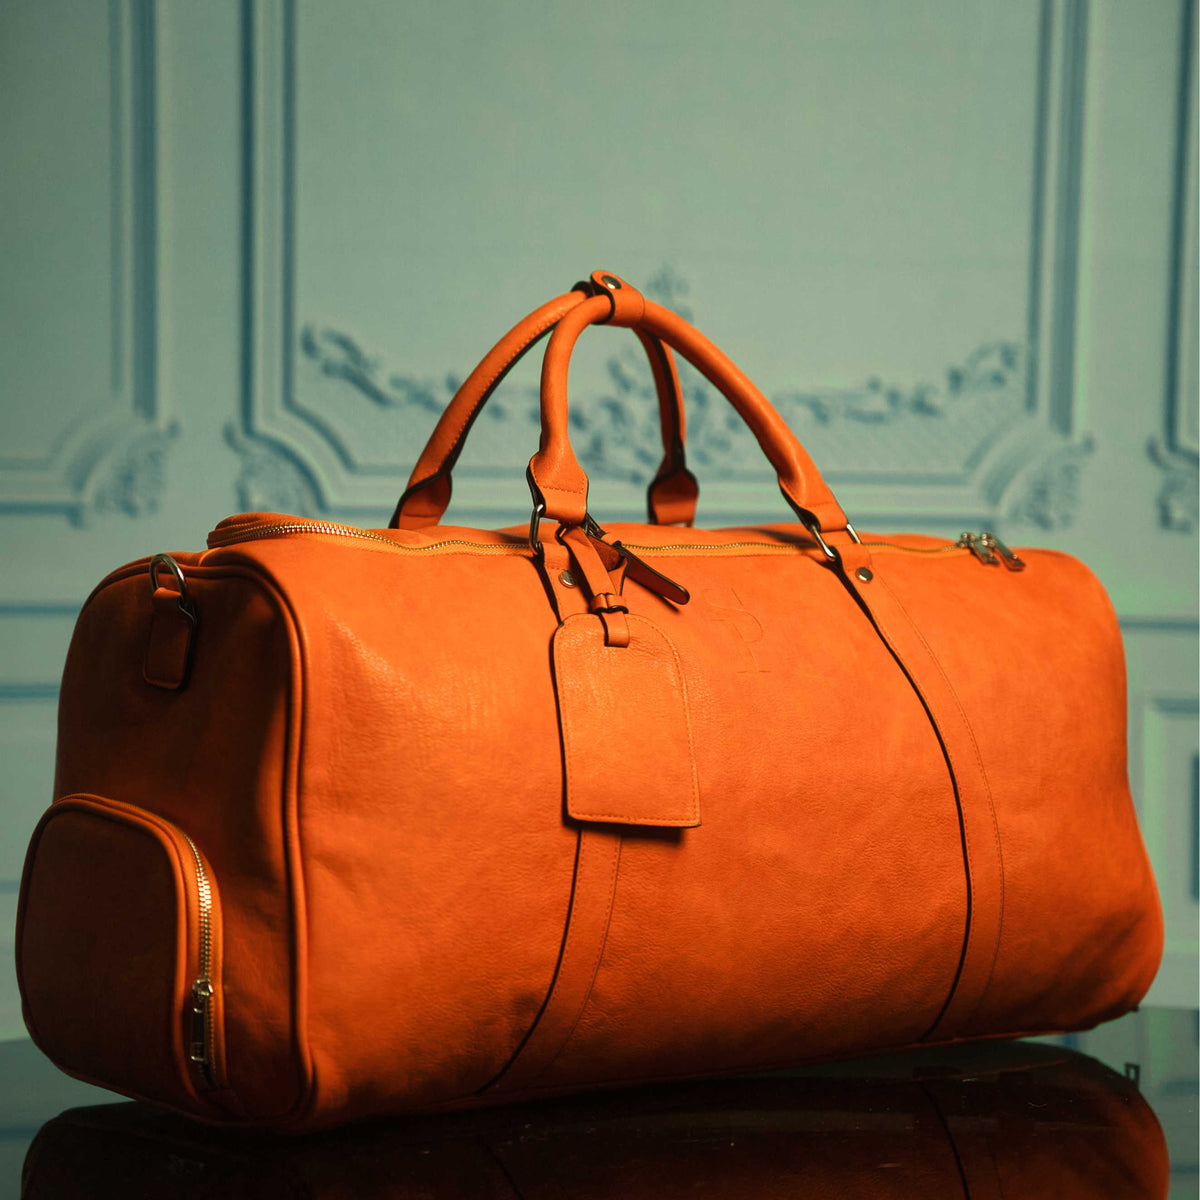 Signature Luxury Duffle Bag